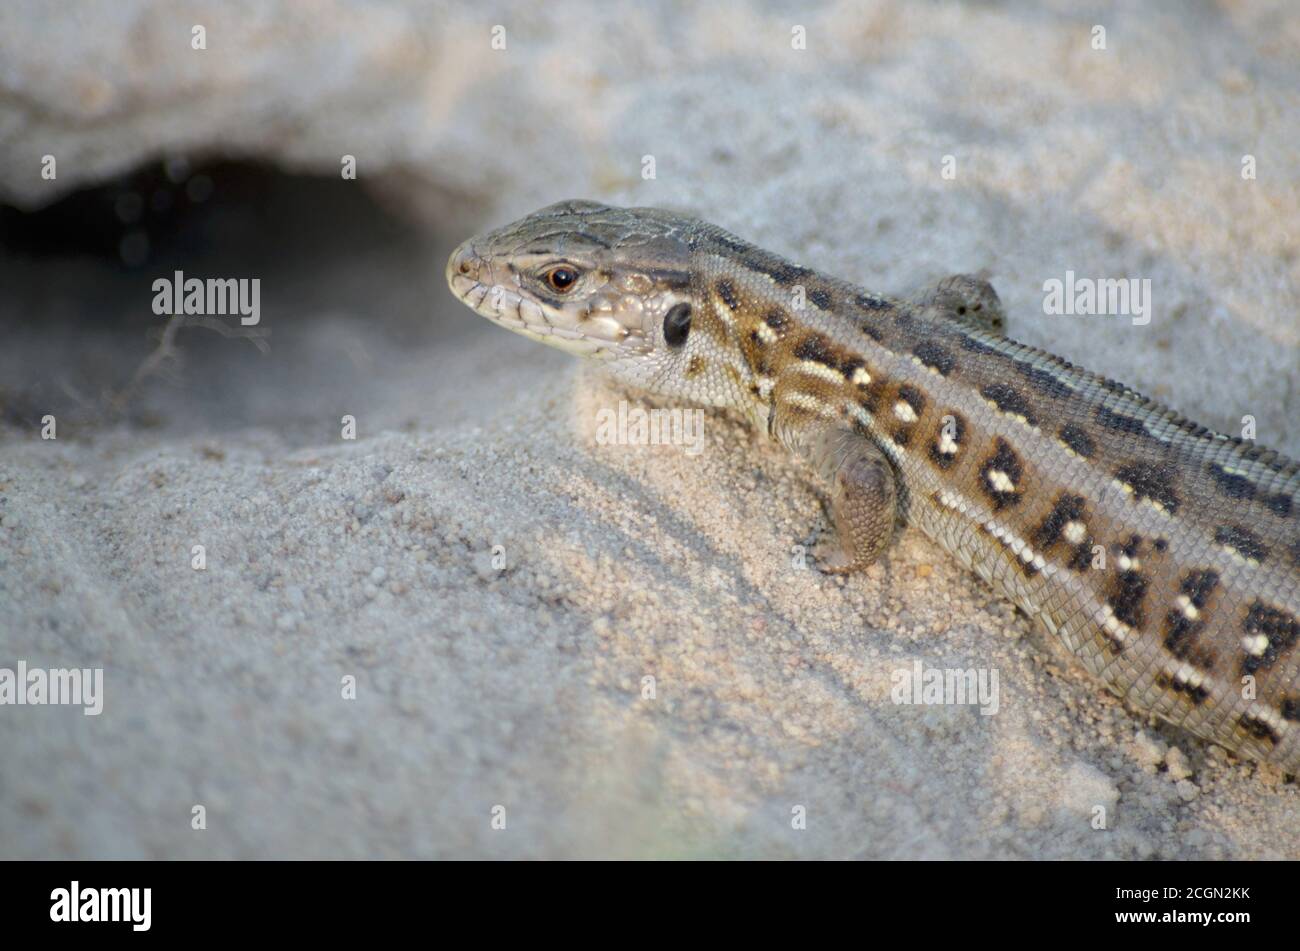 Sand lizard near its burrow in natural habitat. Fauna of Ukraine. Shallow depth of field, closeup. Stock Photo